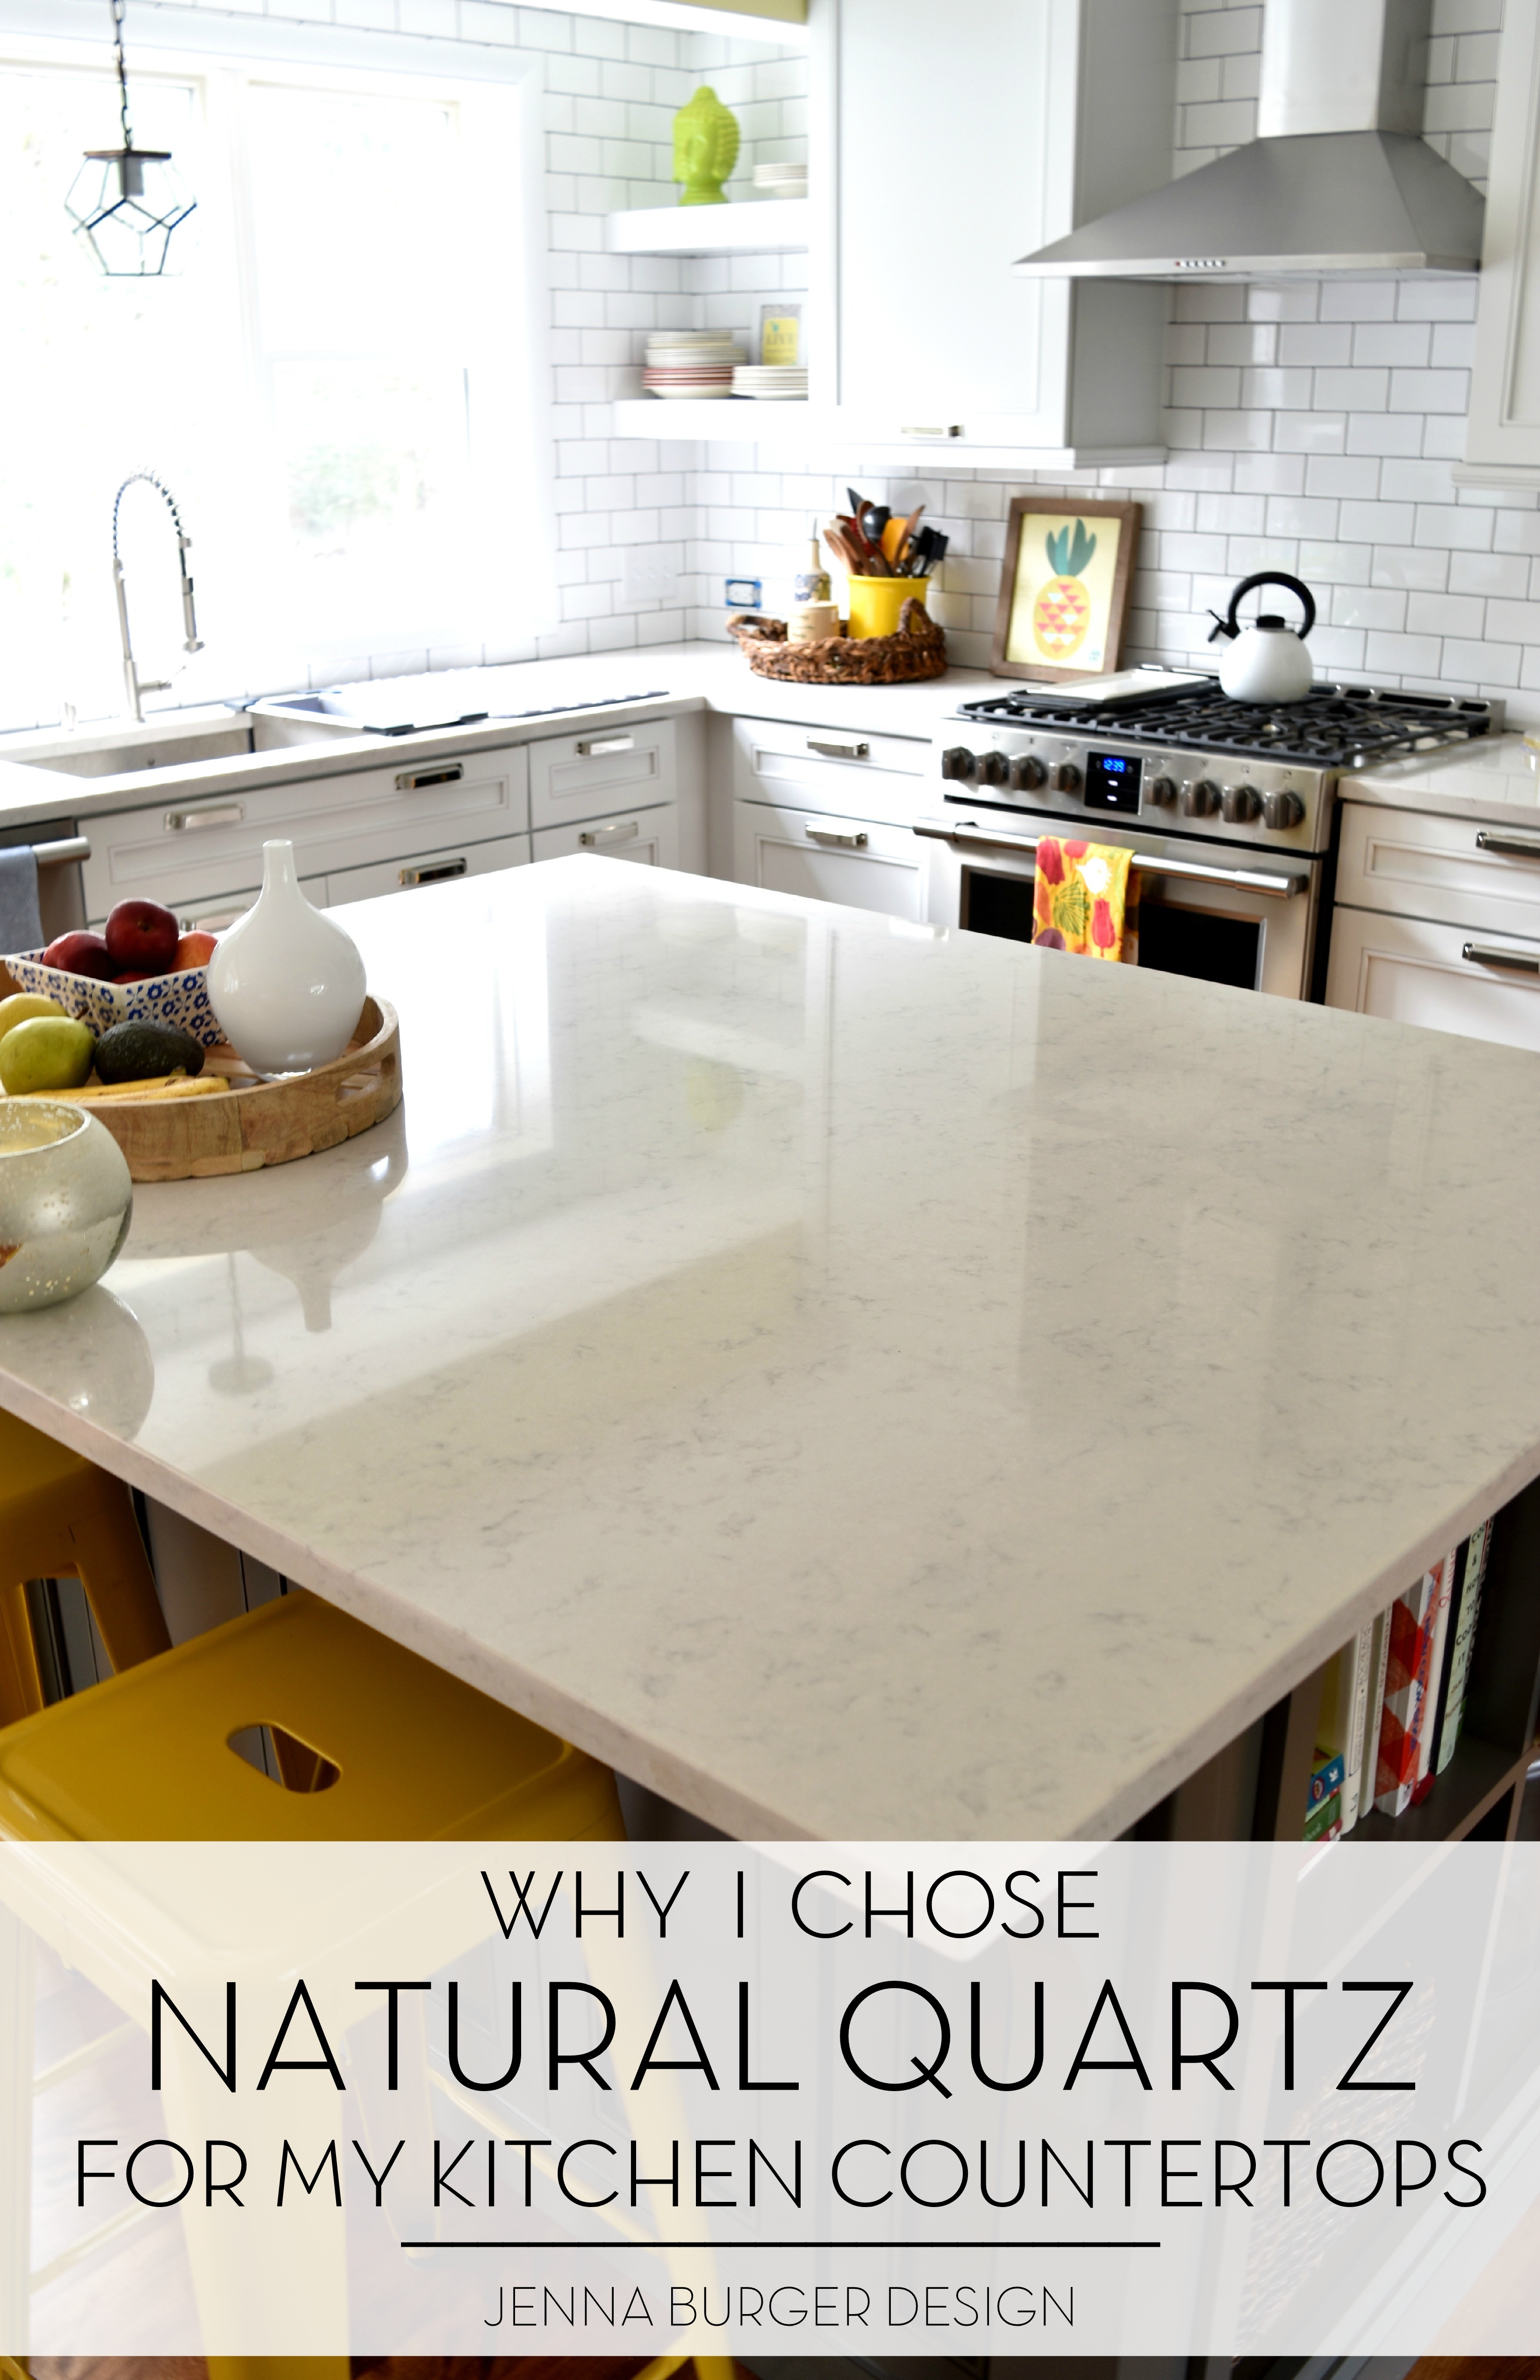 How to Clean Kitchen Countertops: Granite, Quartz, Marble & More